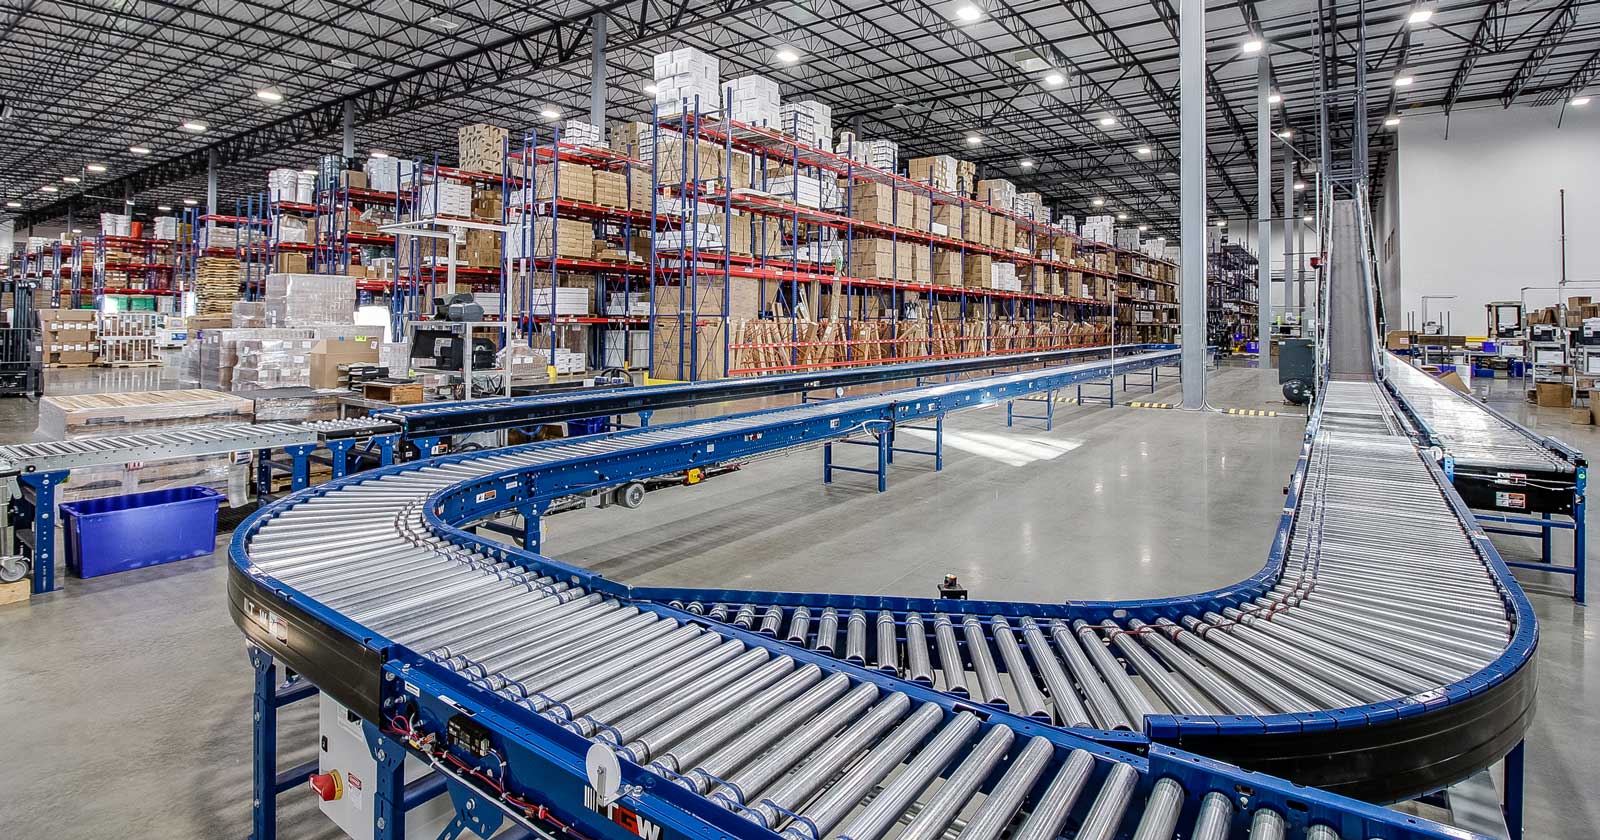 Storage warehouse storage automation design project